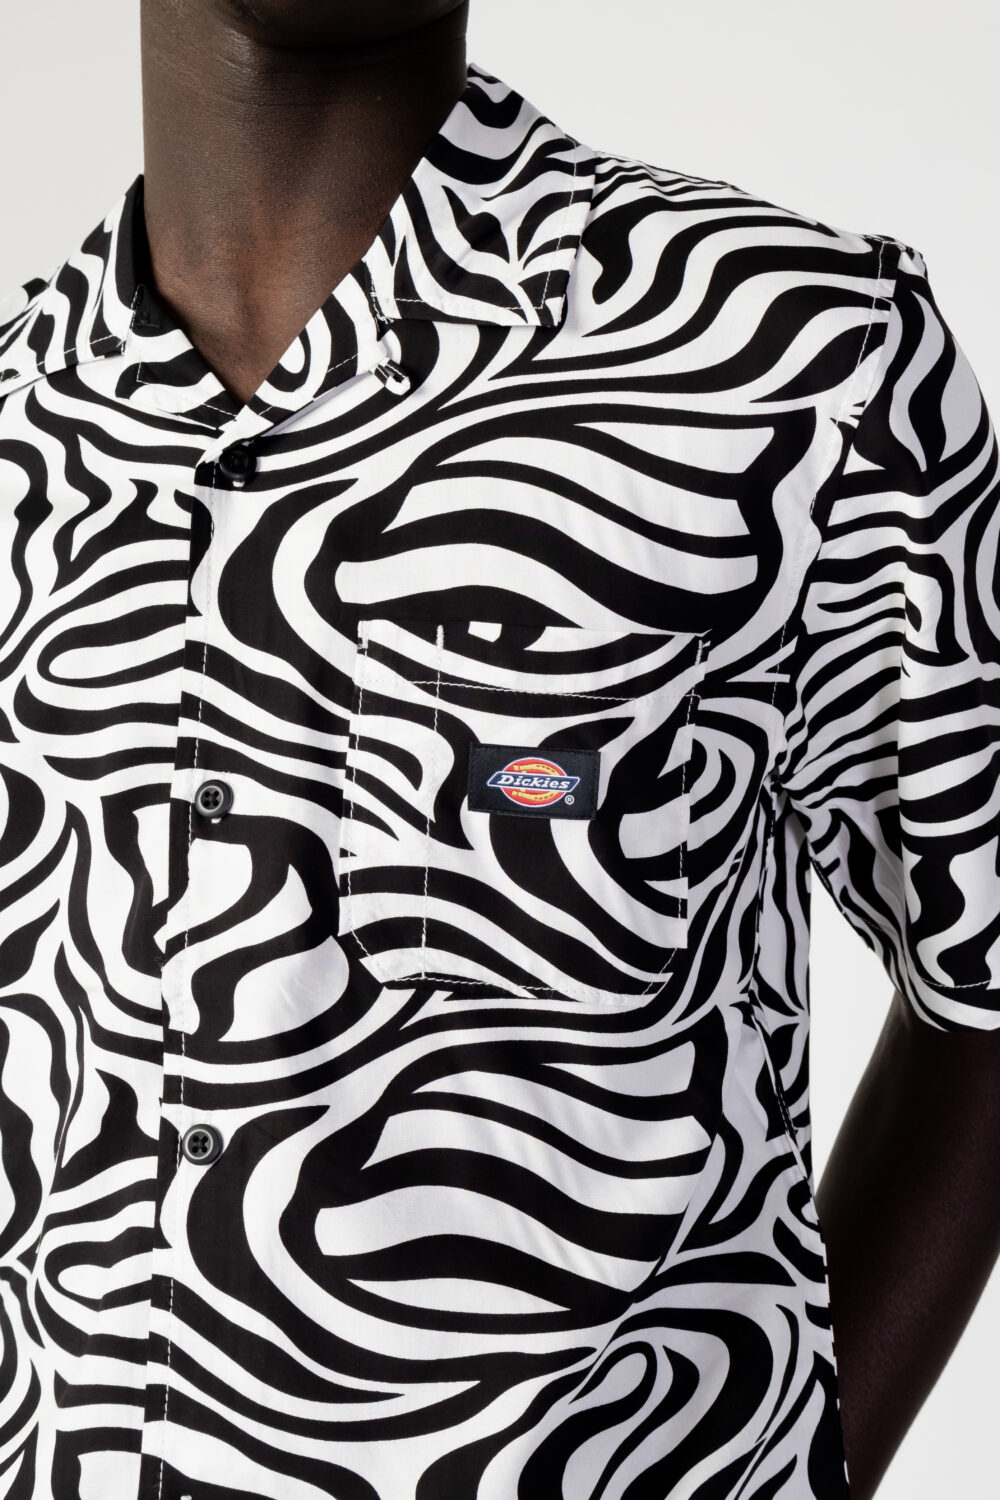 Camicia manica corta Dickies leesburg zebra Black-White - Foto 3